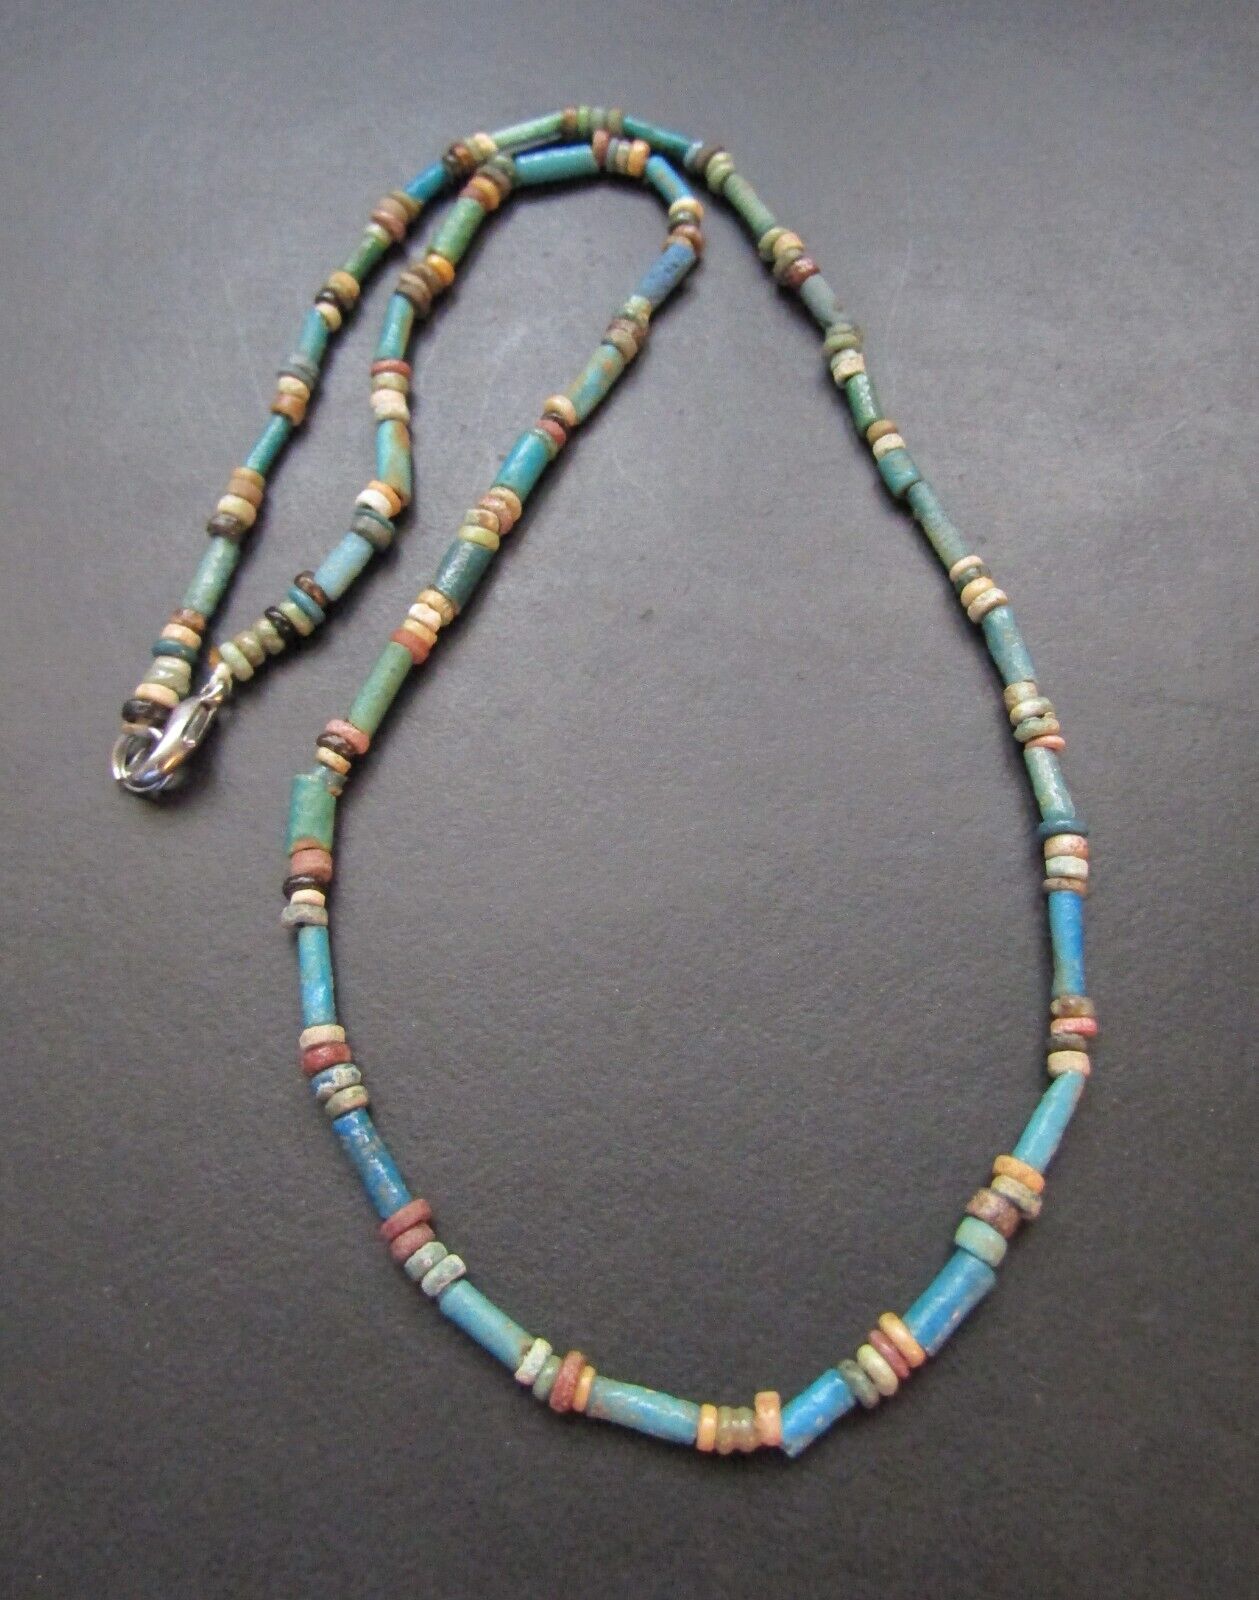 NILE Ancient Egyptian Amulet Mummy Bead Necklace ca 600 BC